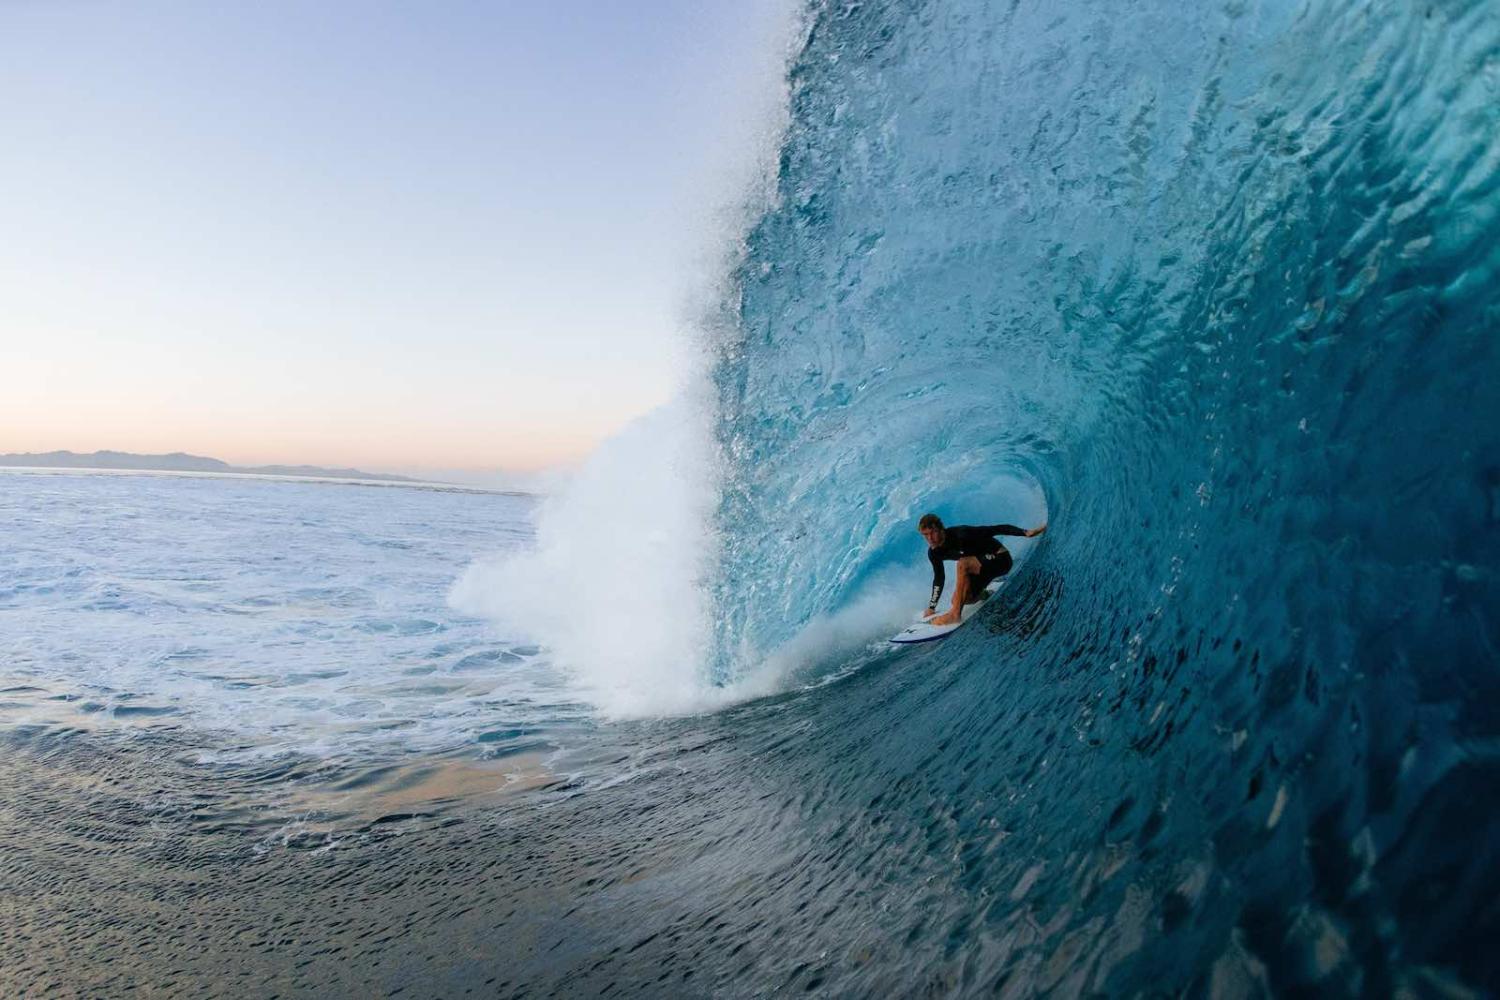 Before the break: The 2016 Fiji Pro at Cloudbreak (Ed Sloane/World Surf League via Getty Images)